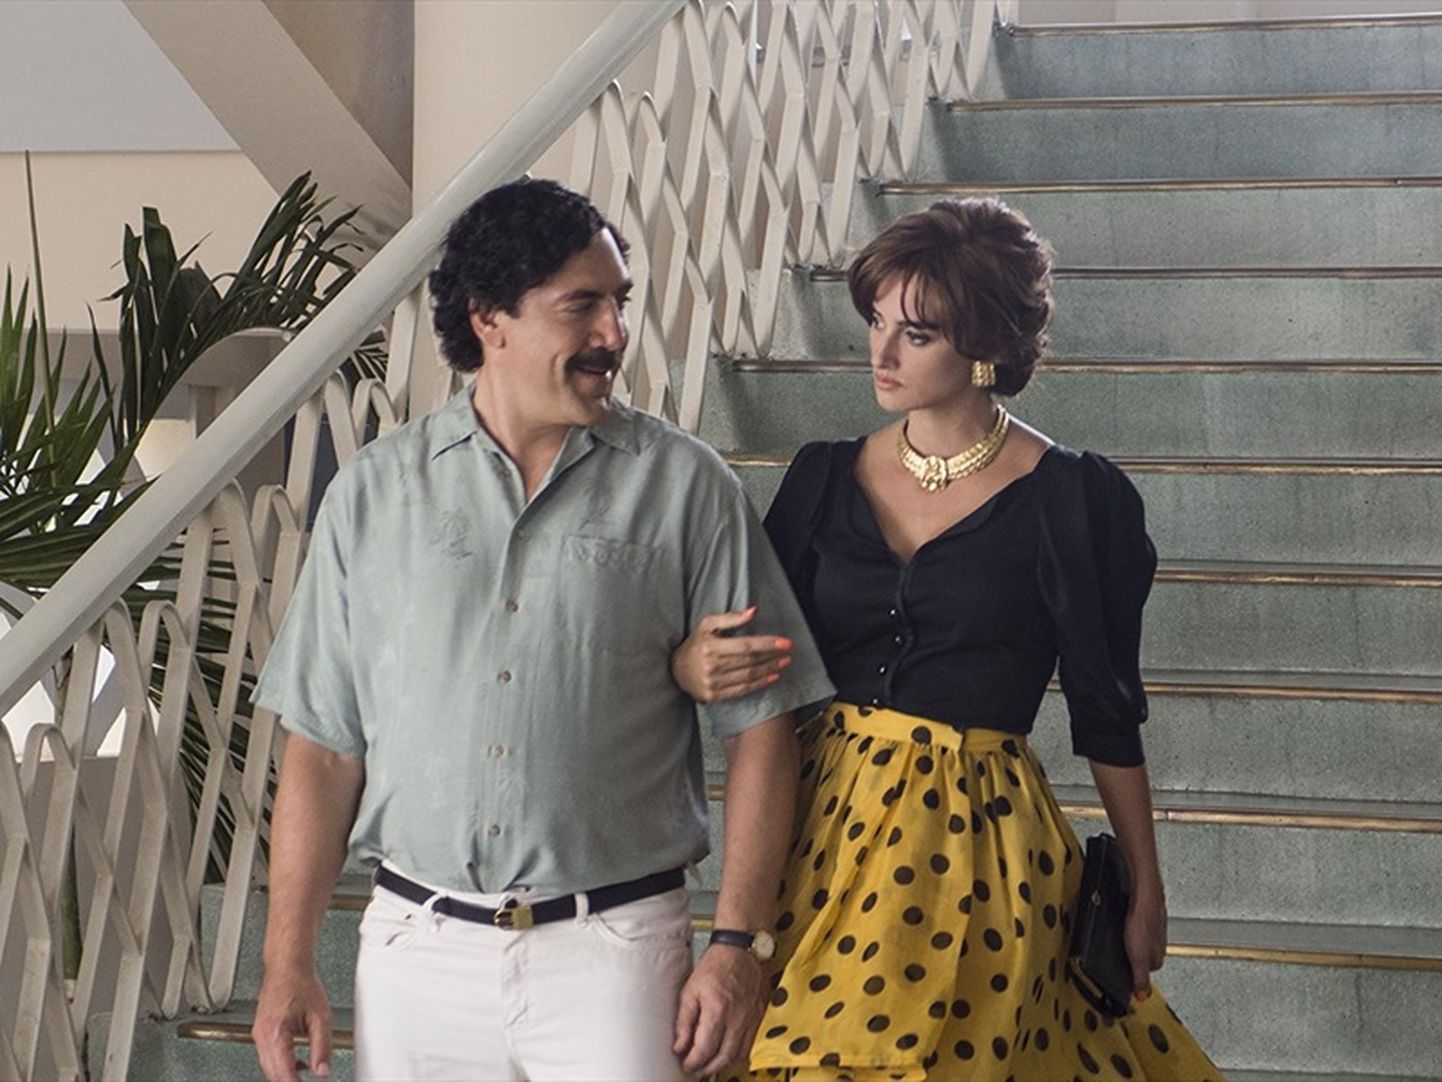 Centrumi kinos linastub film "Pablo ja Escobari vahel".